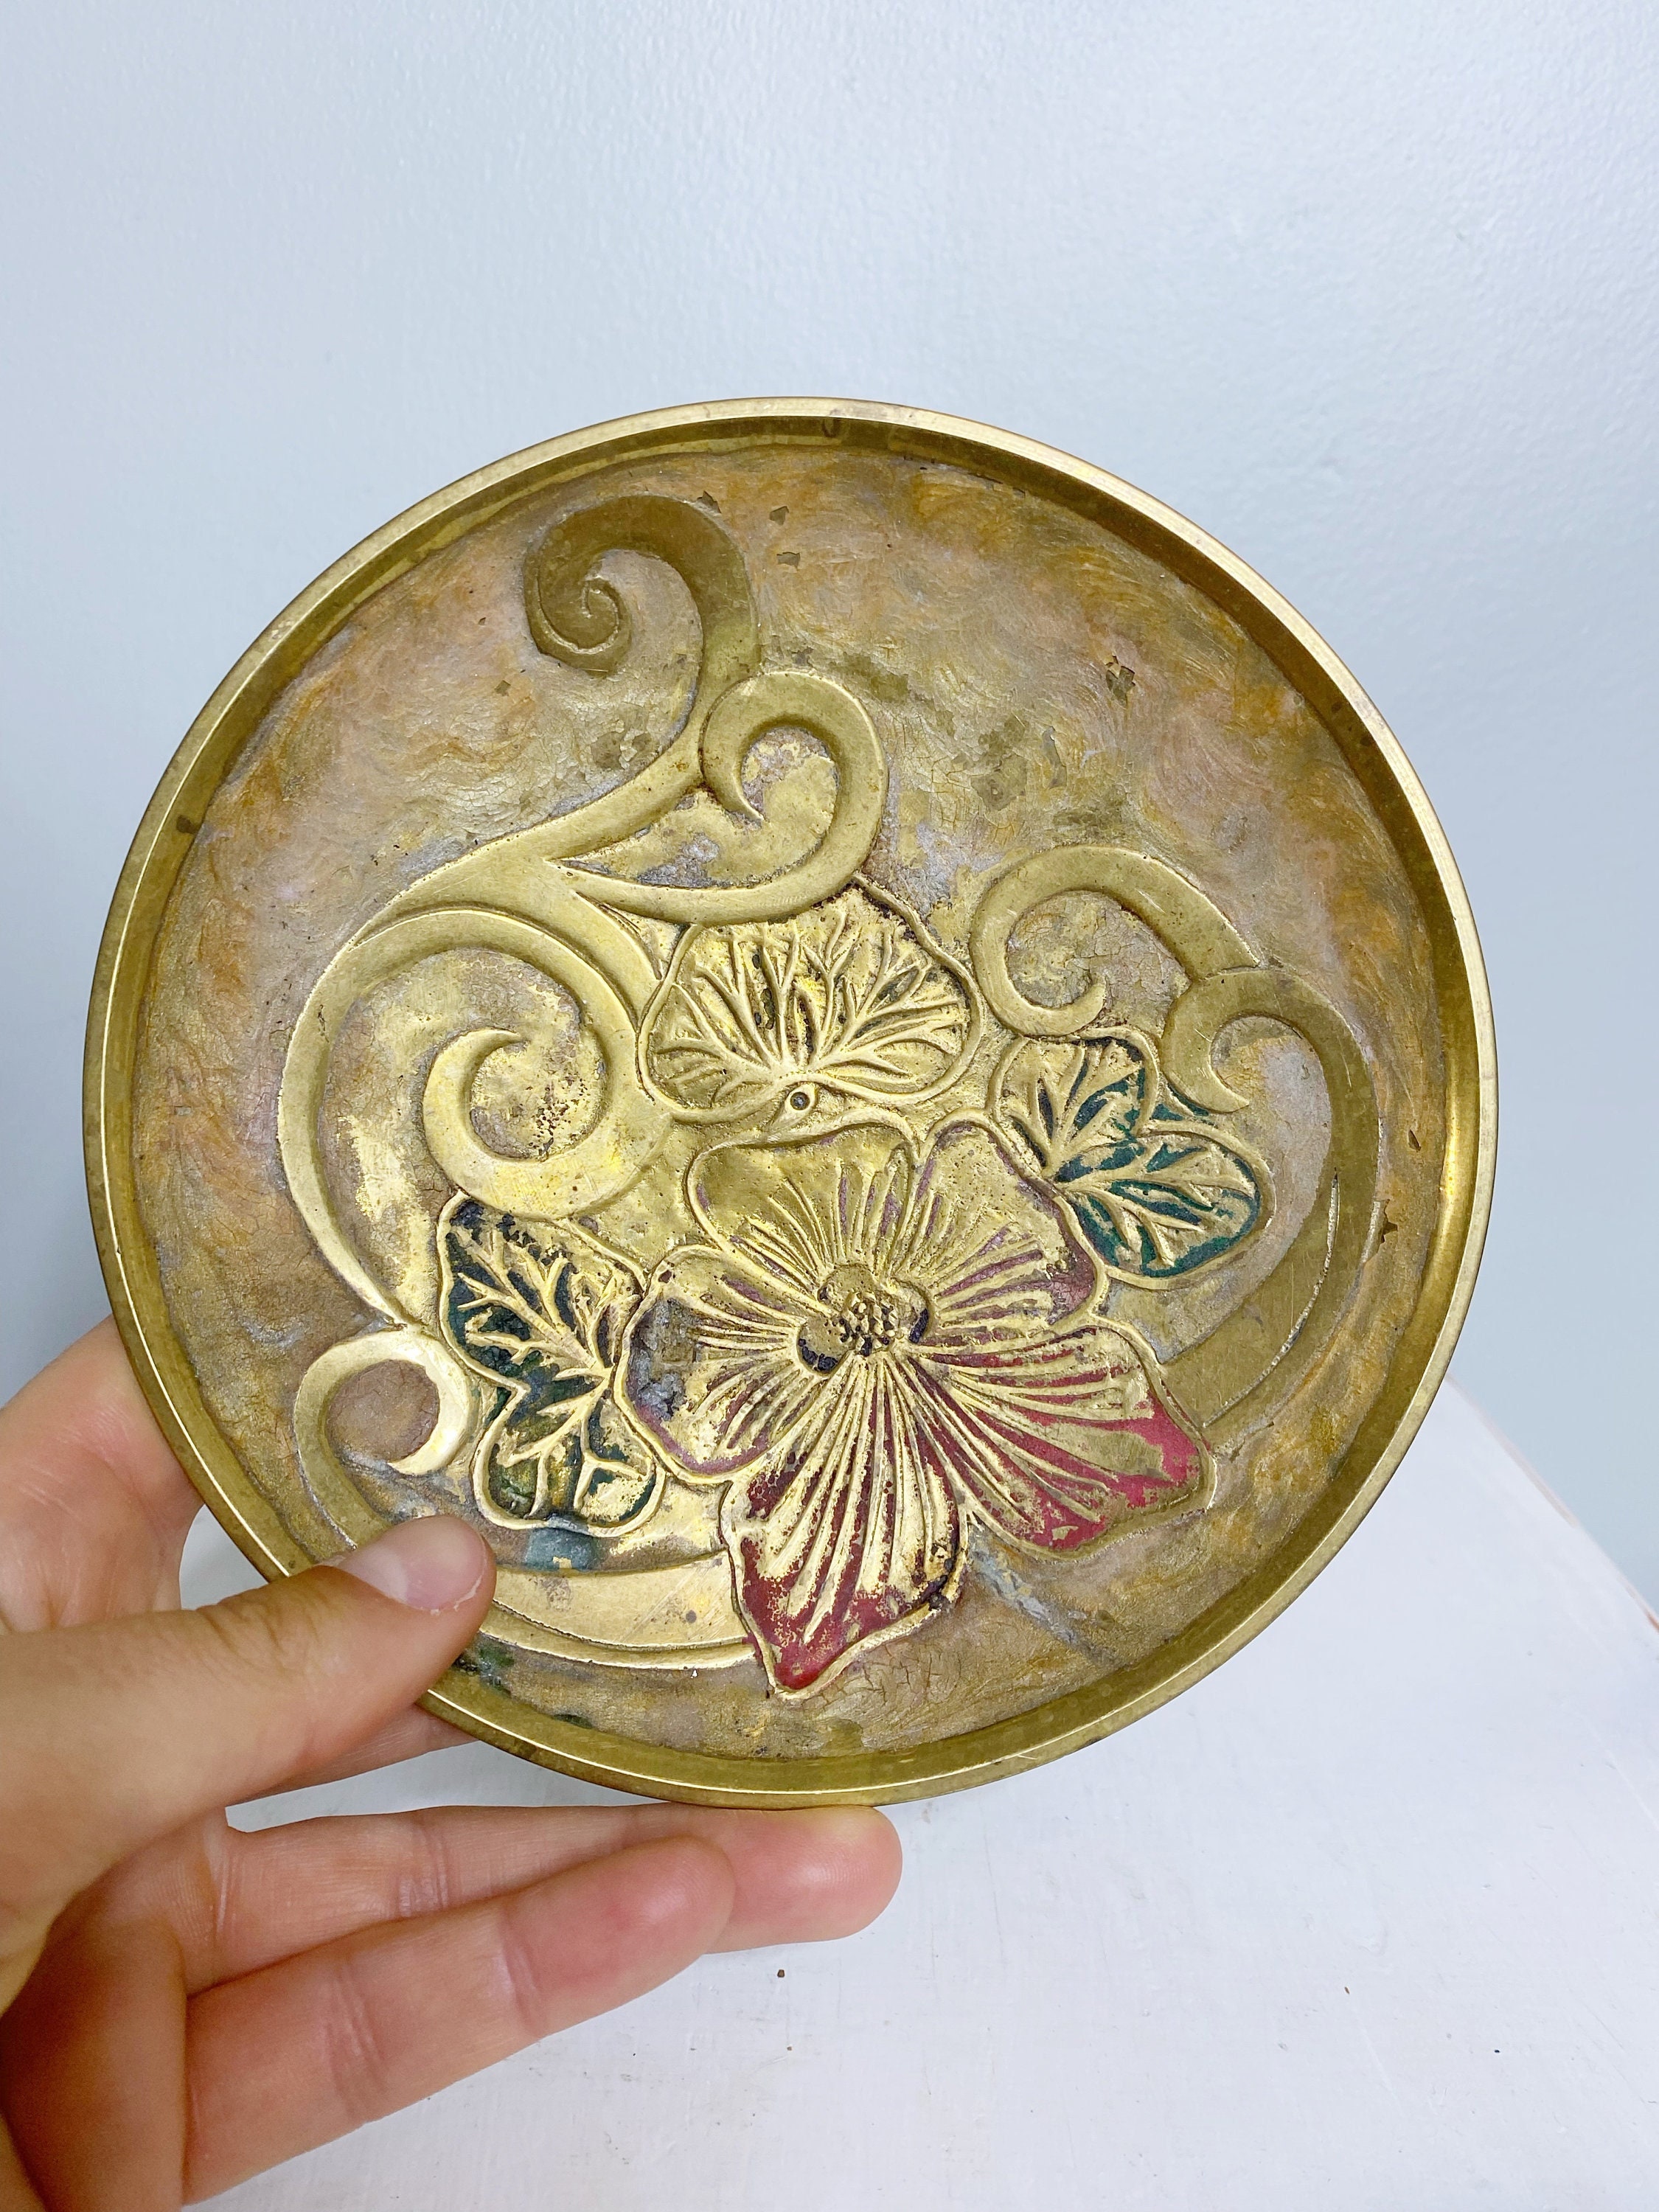 Enamel painted on brass dish